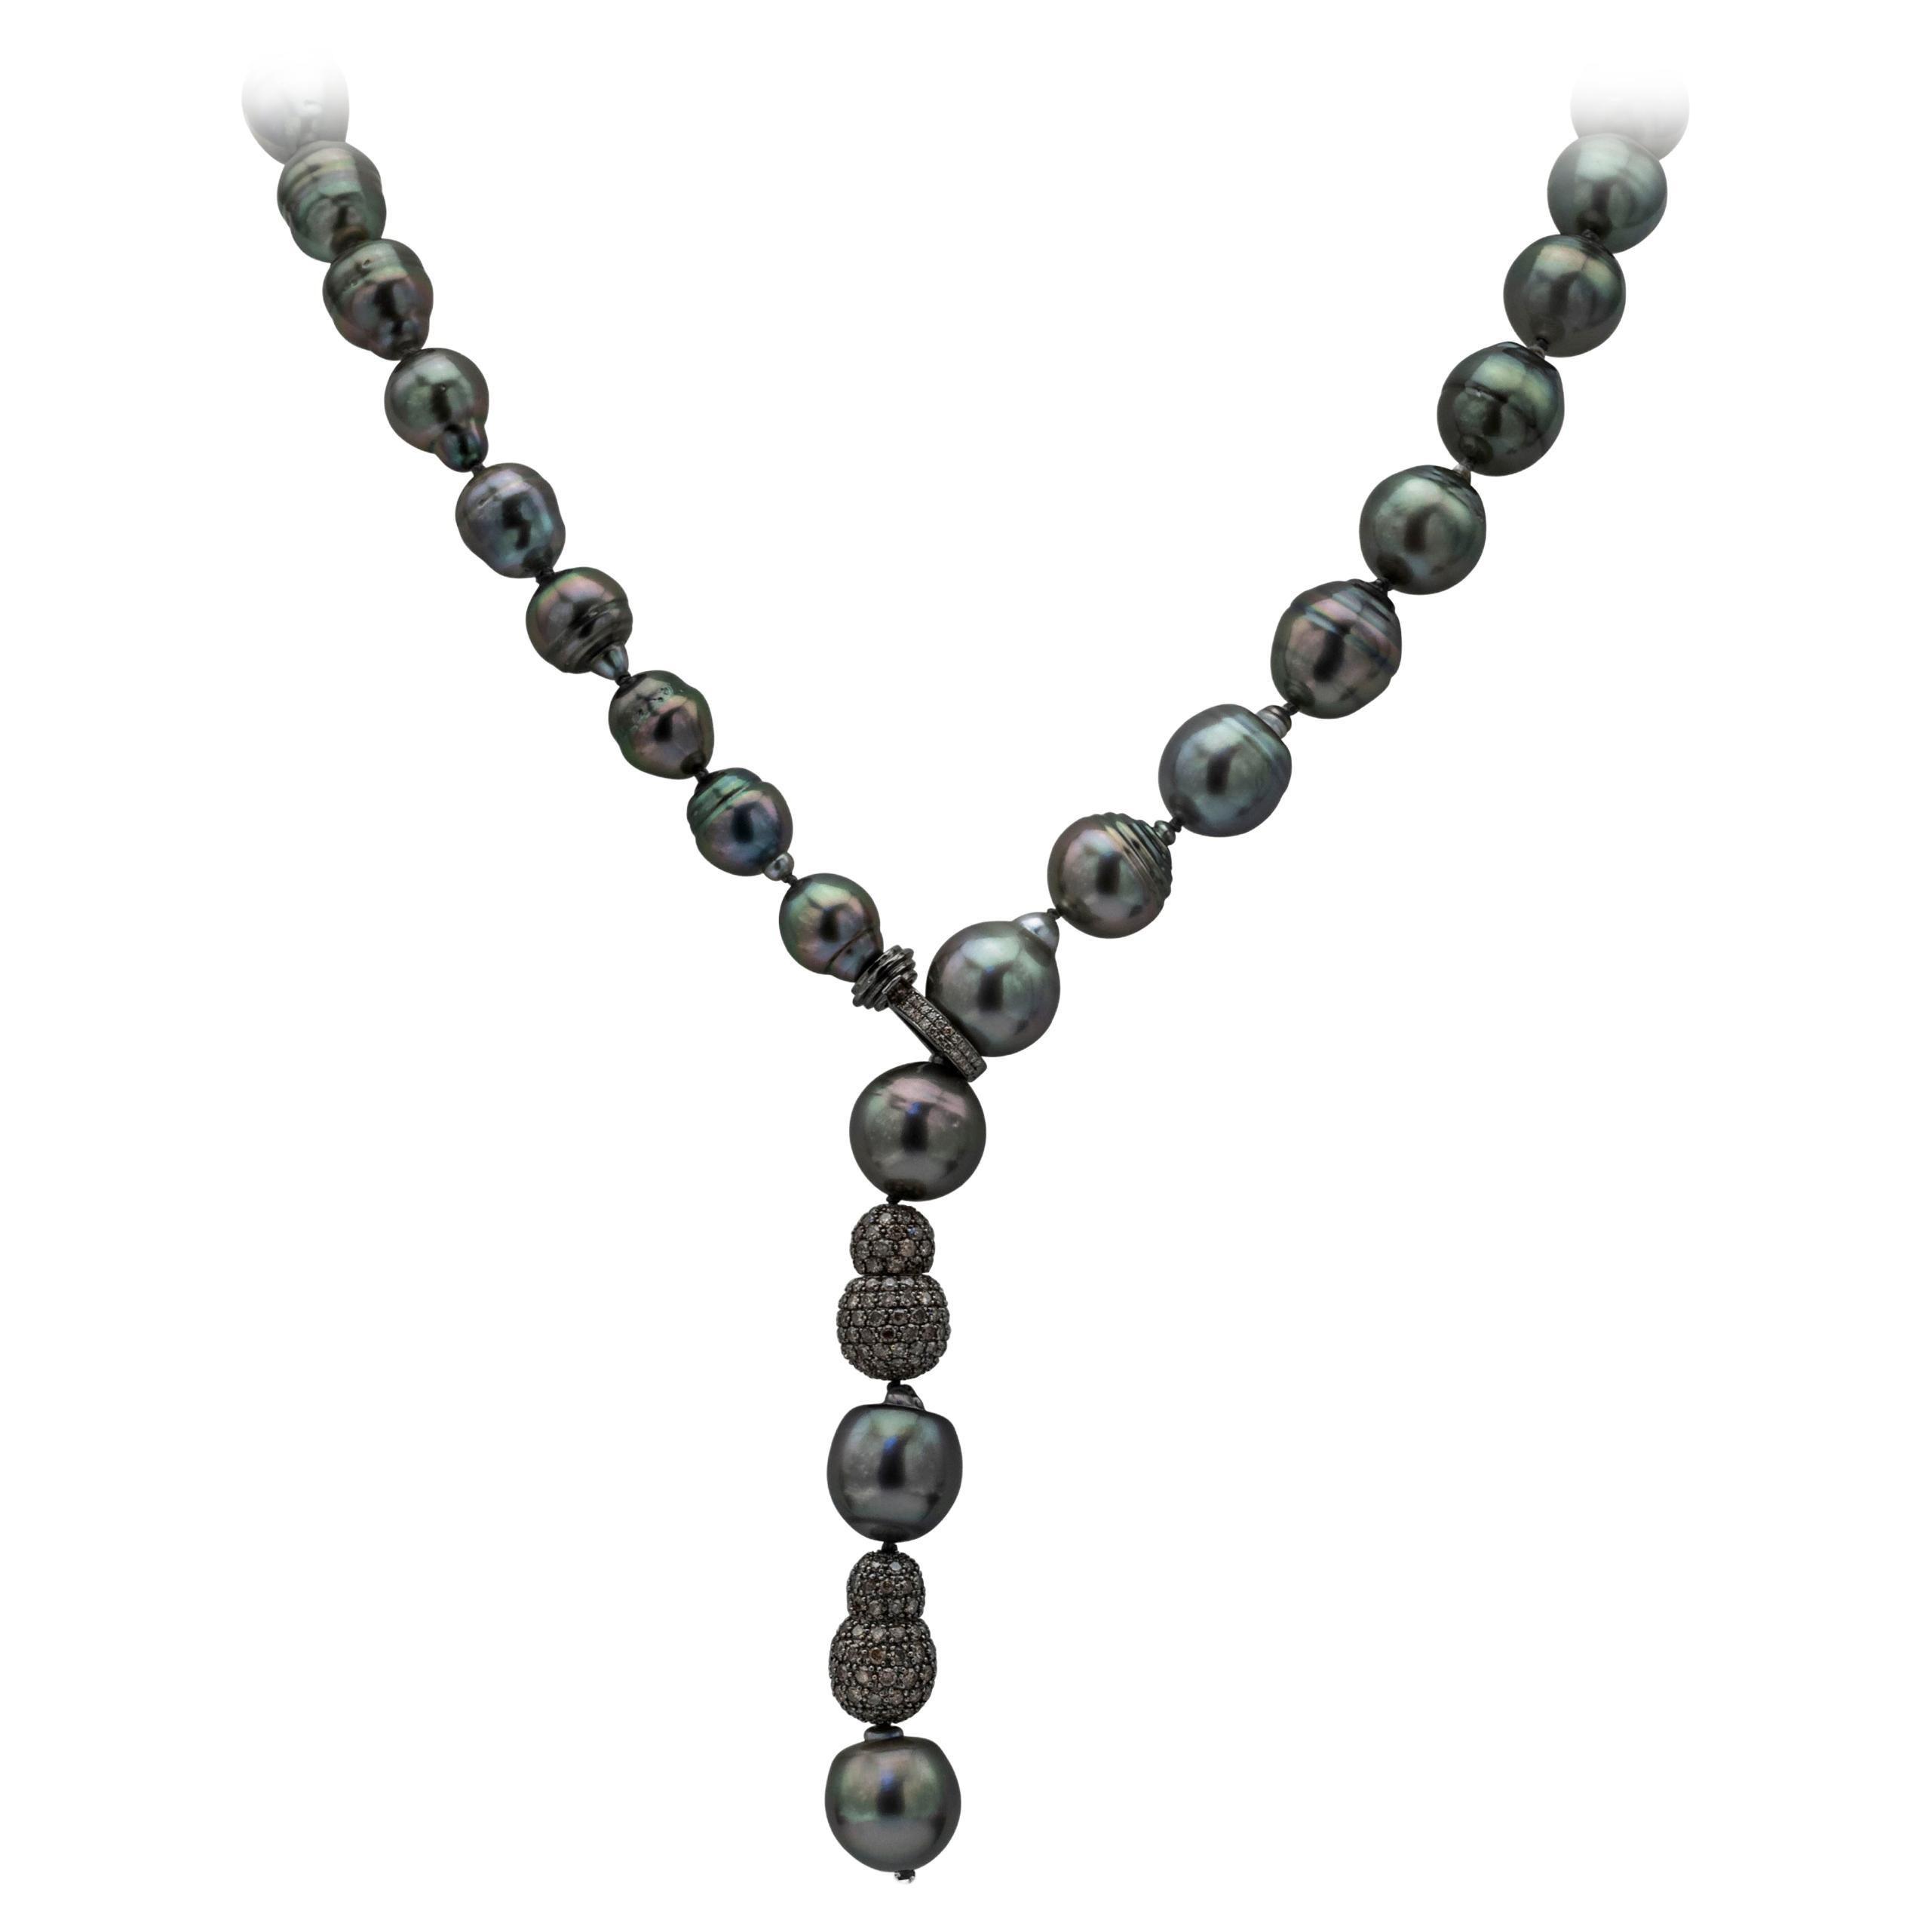 Collier de diamants Lariet et perles baroques de Tahiti de 4,00 carats au total